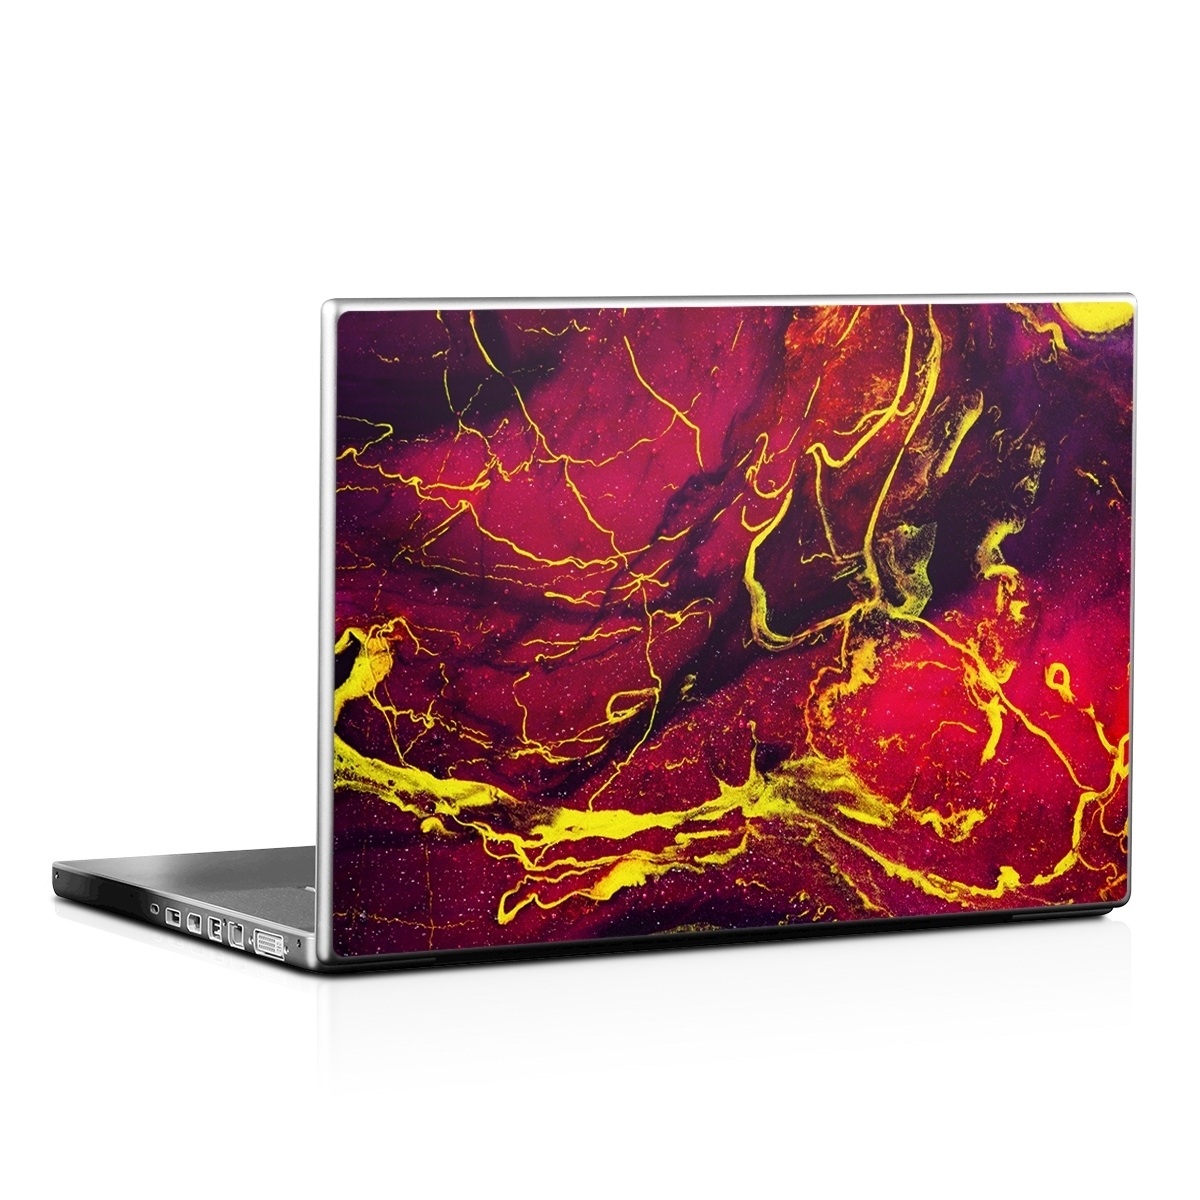 Laptop Skin - Miasma (Image 1)